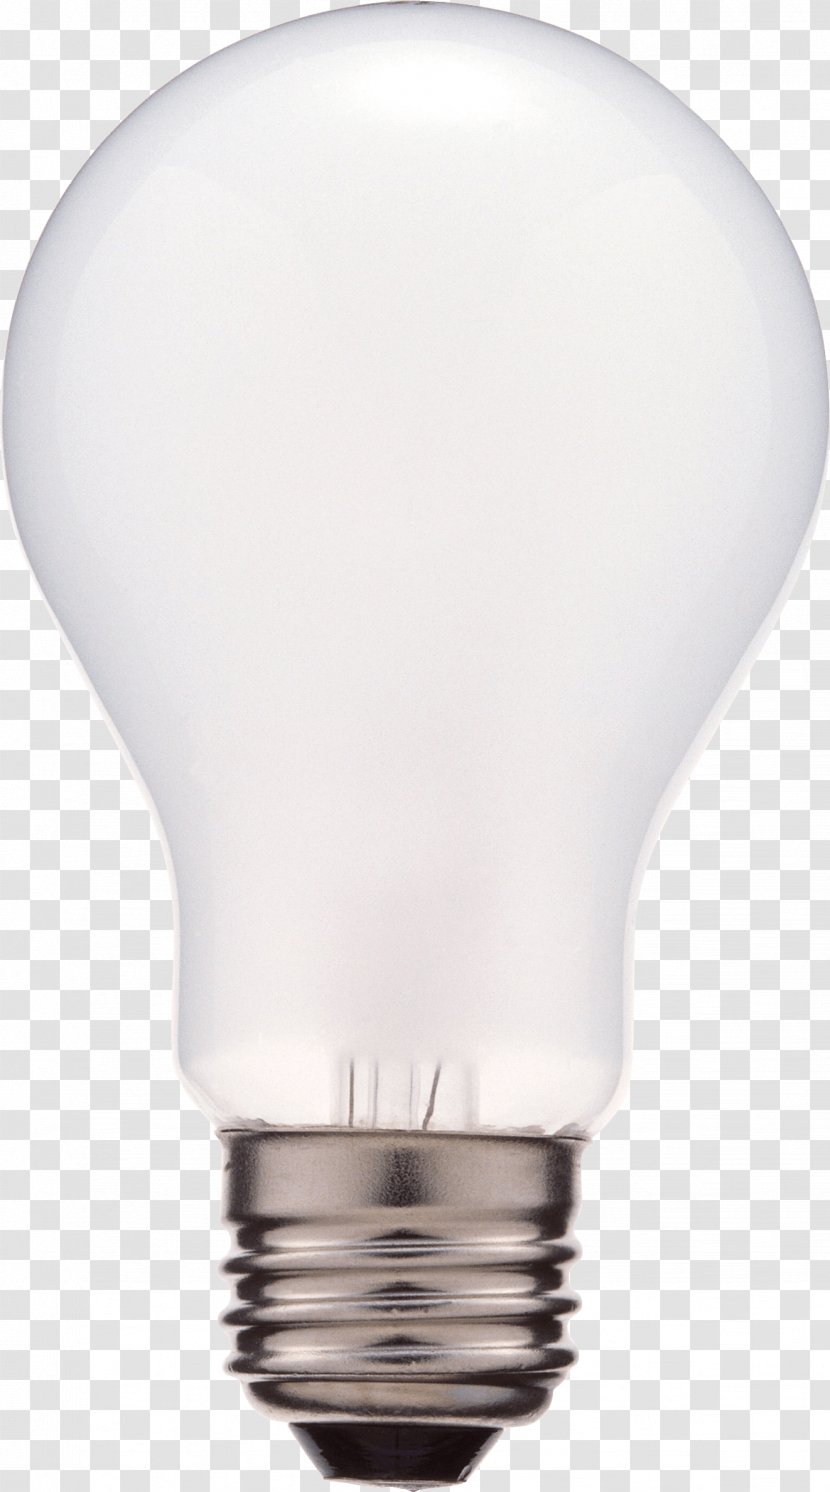 Incandescent Light Bulb Incandescence Book - Compact Fluorescent Lamp - Image Transparent PNG